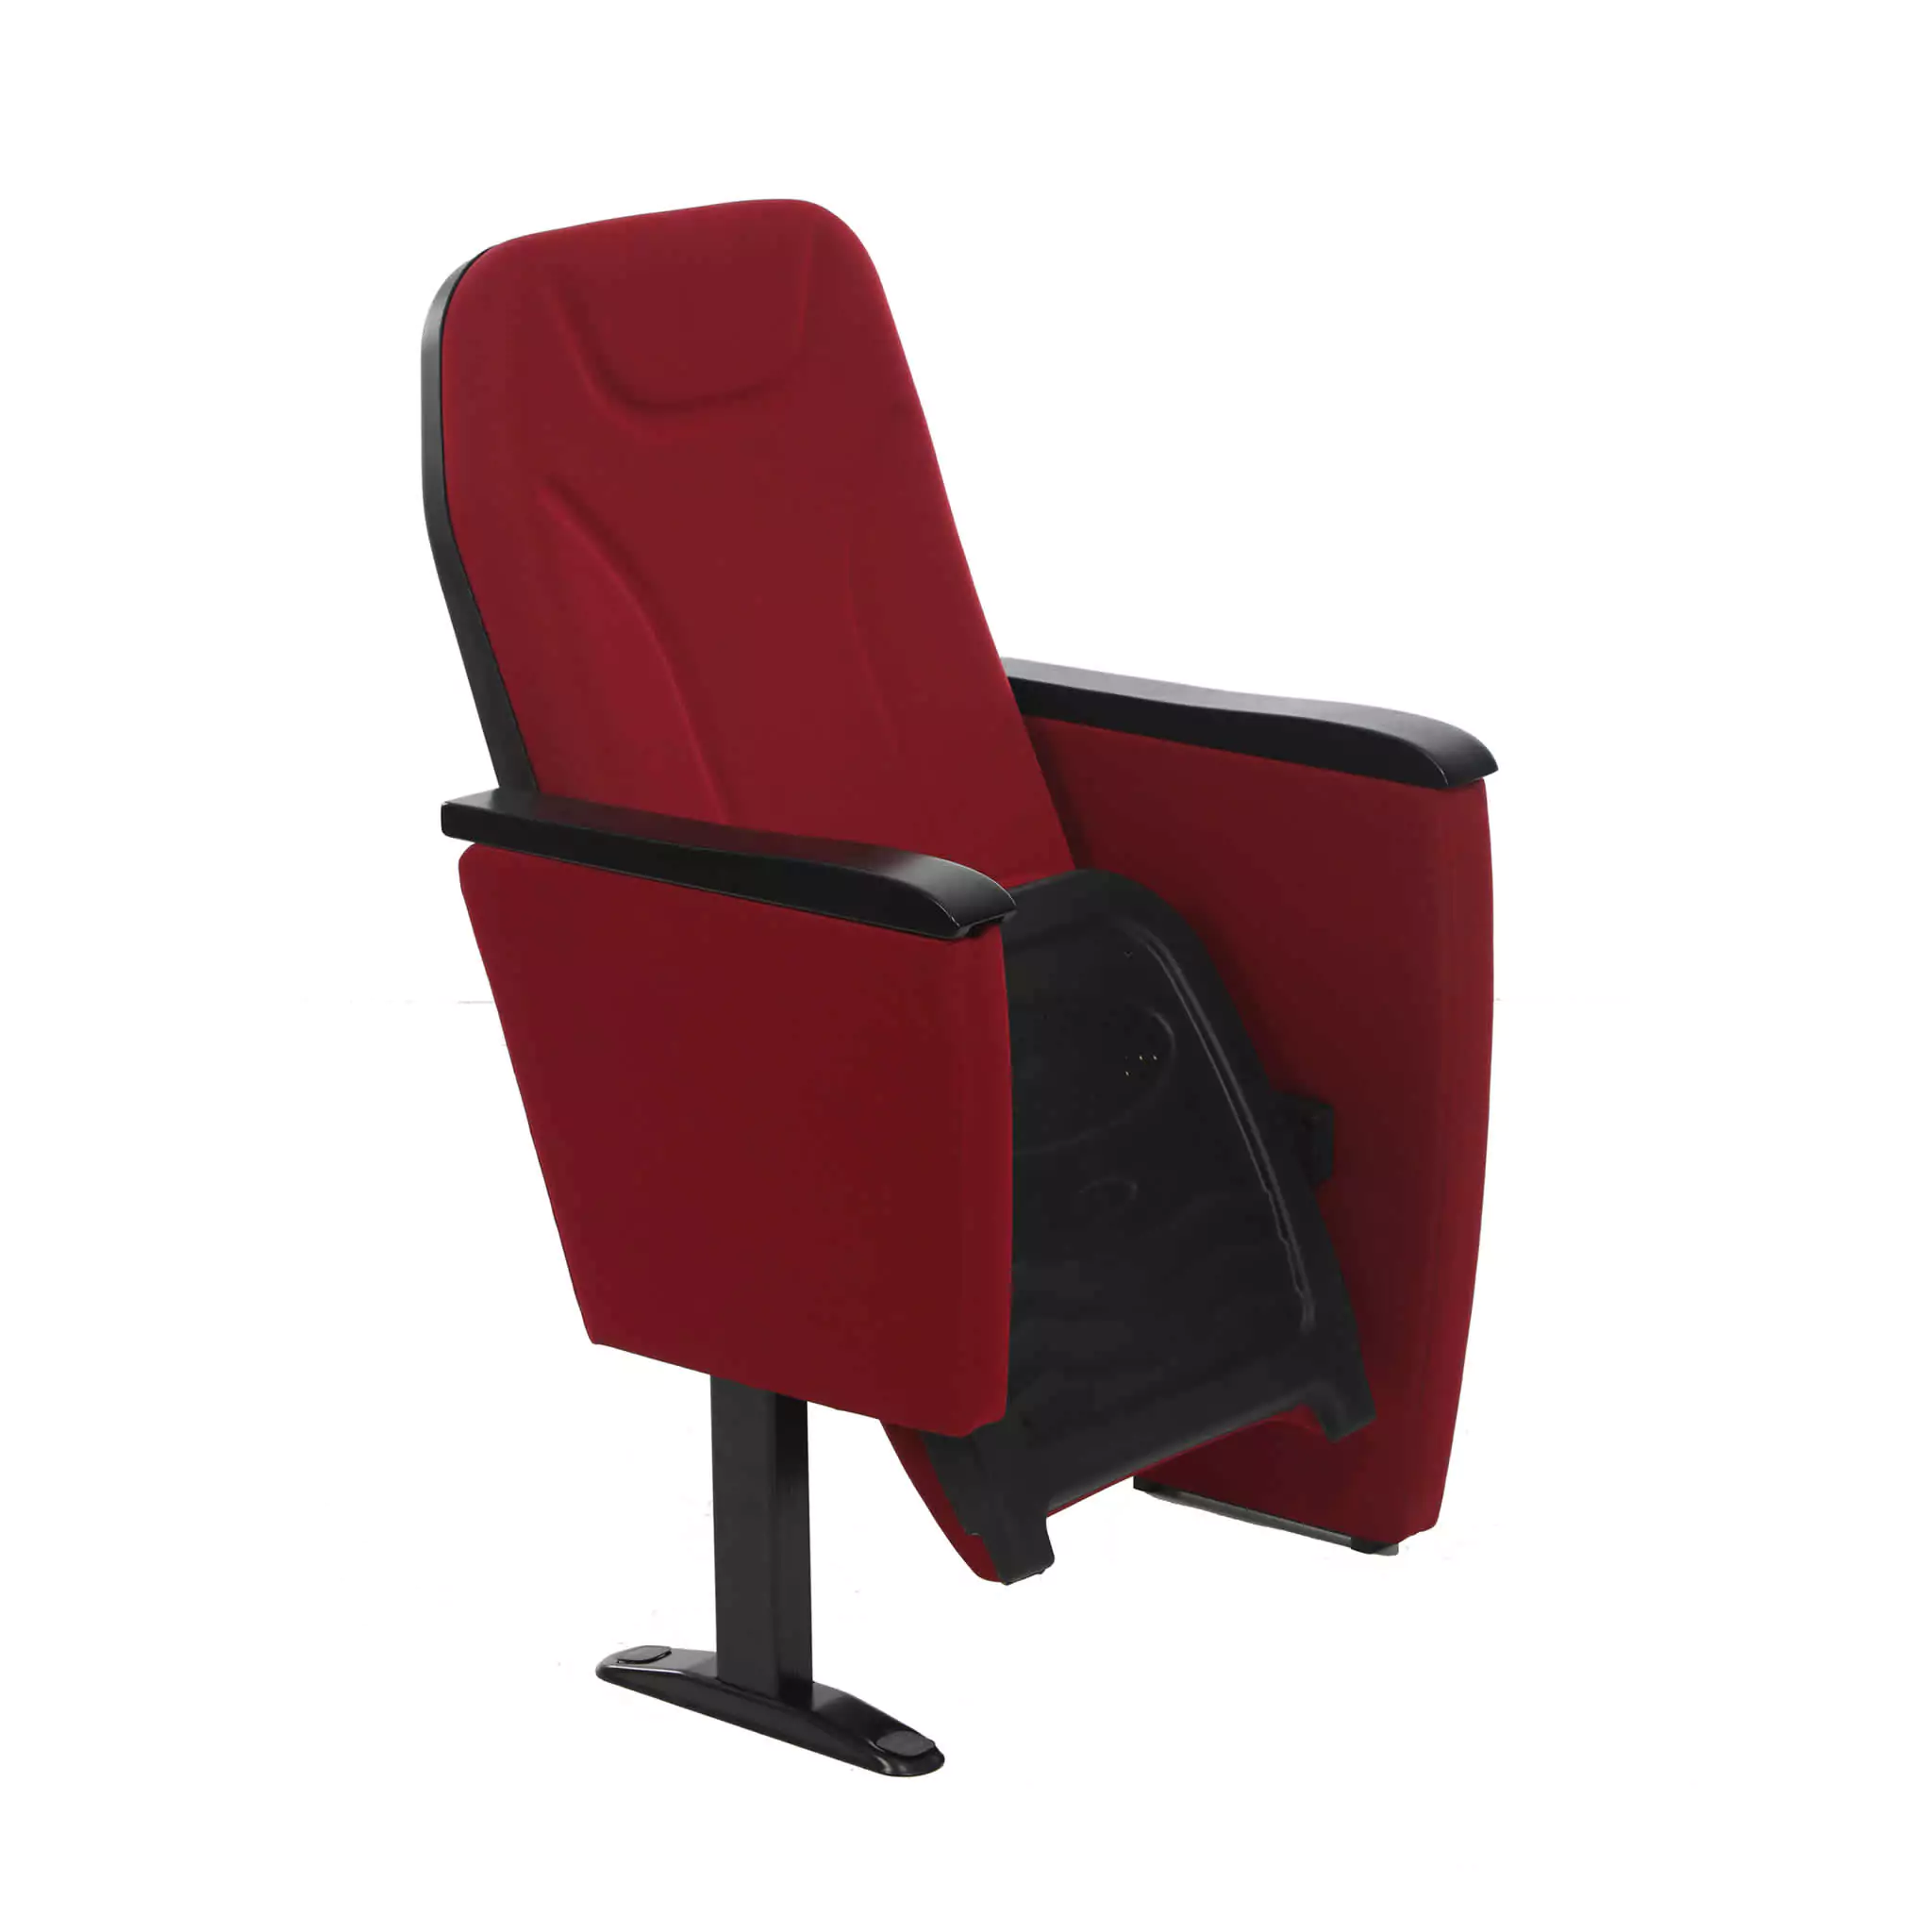 Seat Model: ZIRCON 03